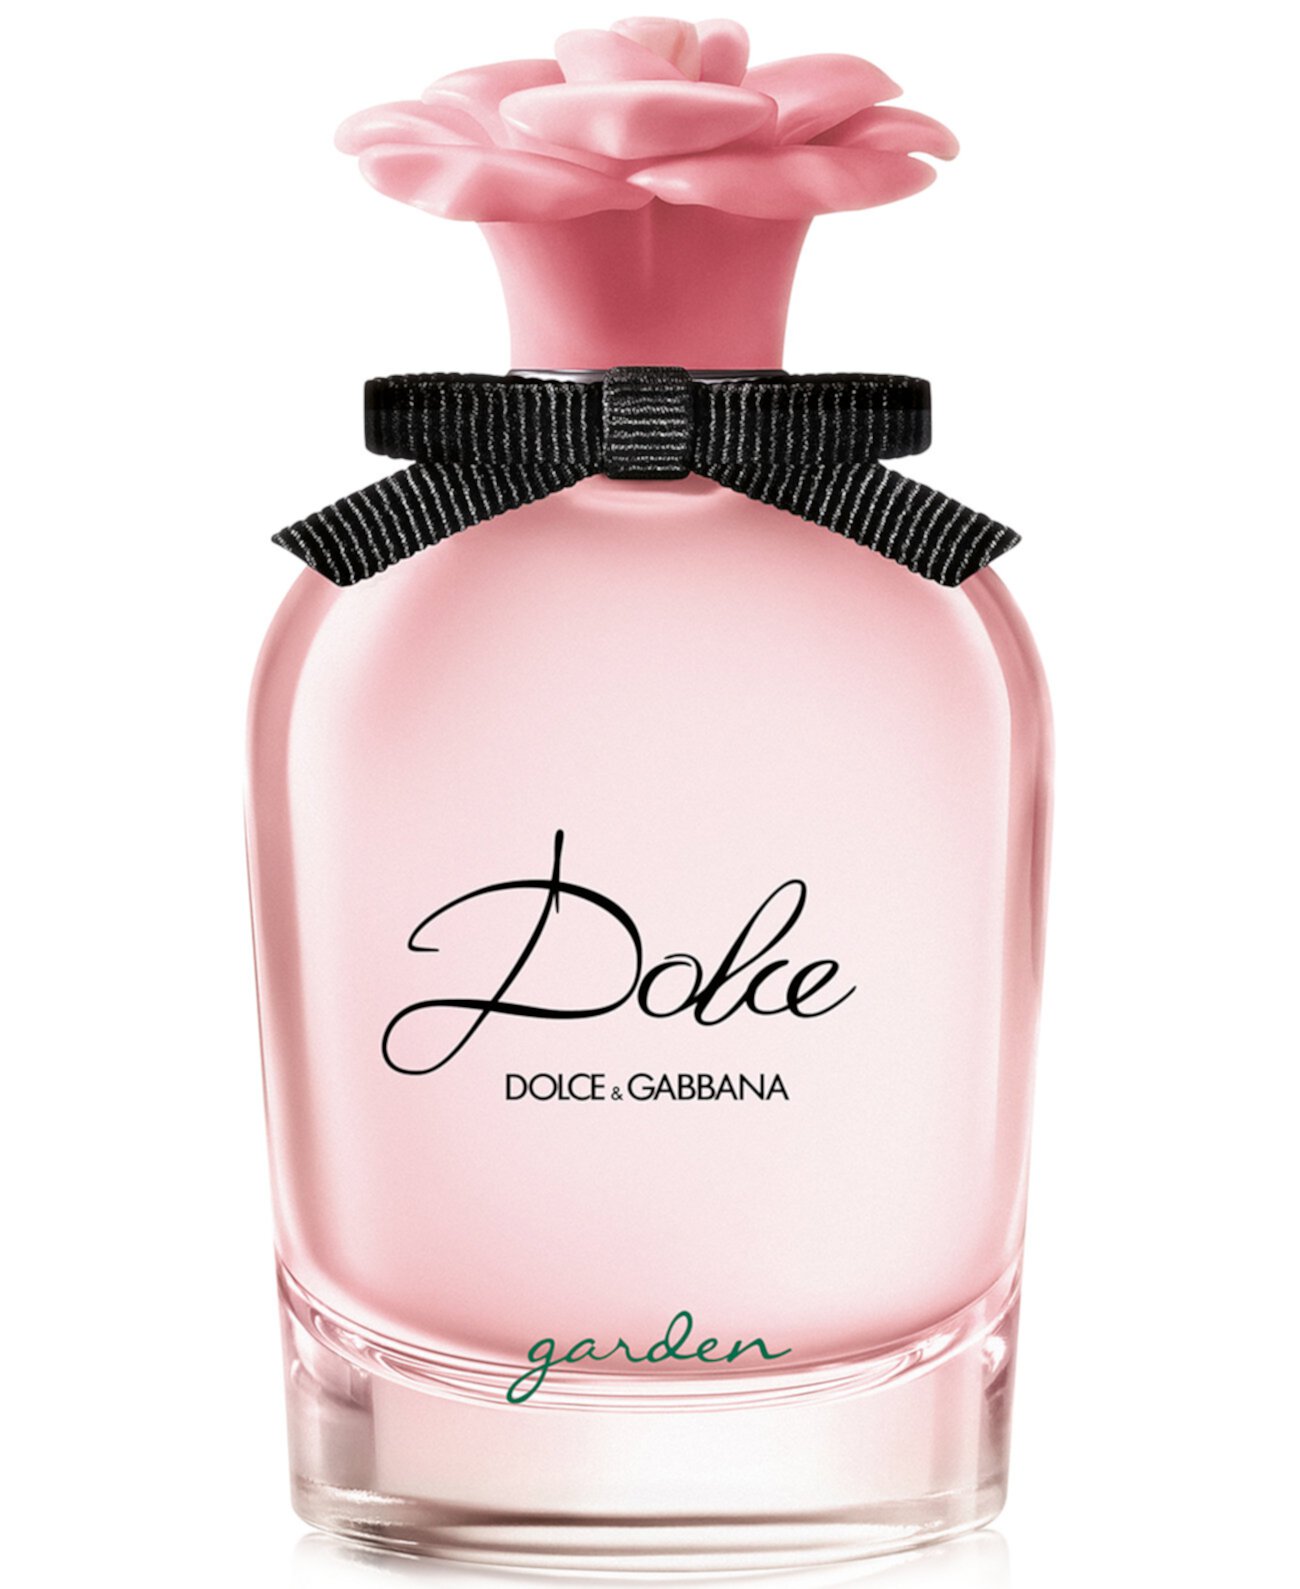 DOLCE & GABBANA Dolce Garden Eau de Parfum Spray, 2,5 унции. Dolce & Gabbana